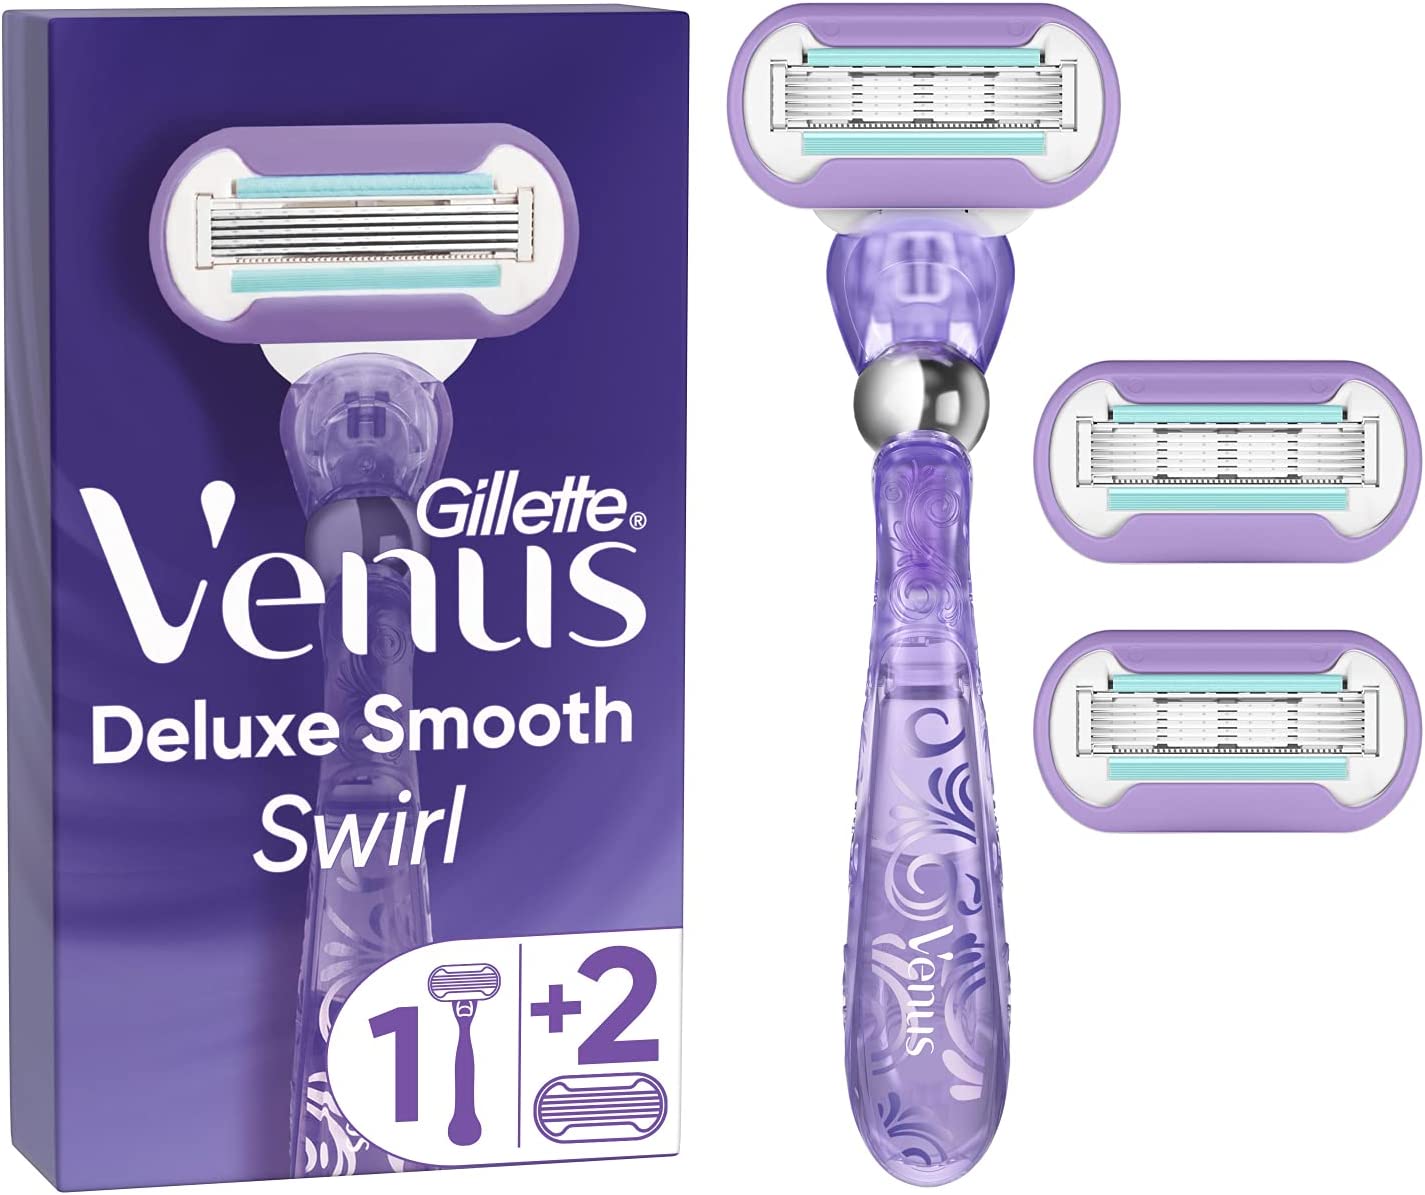 Gillette Venus Deluxe Smooth Swirl 